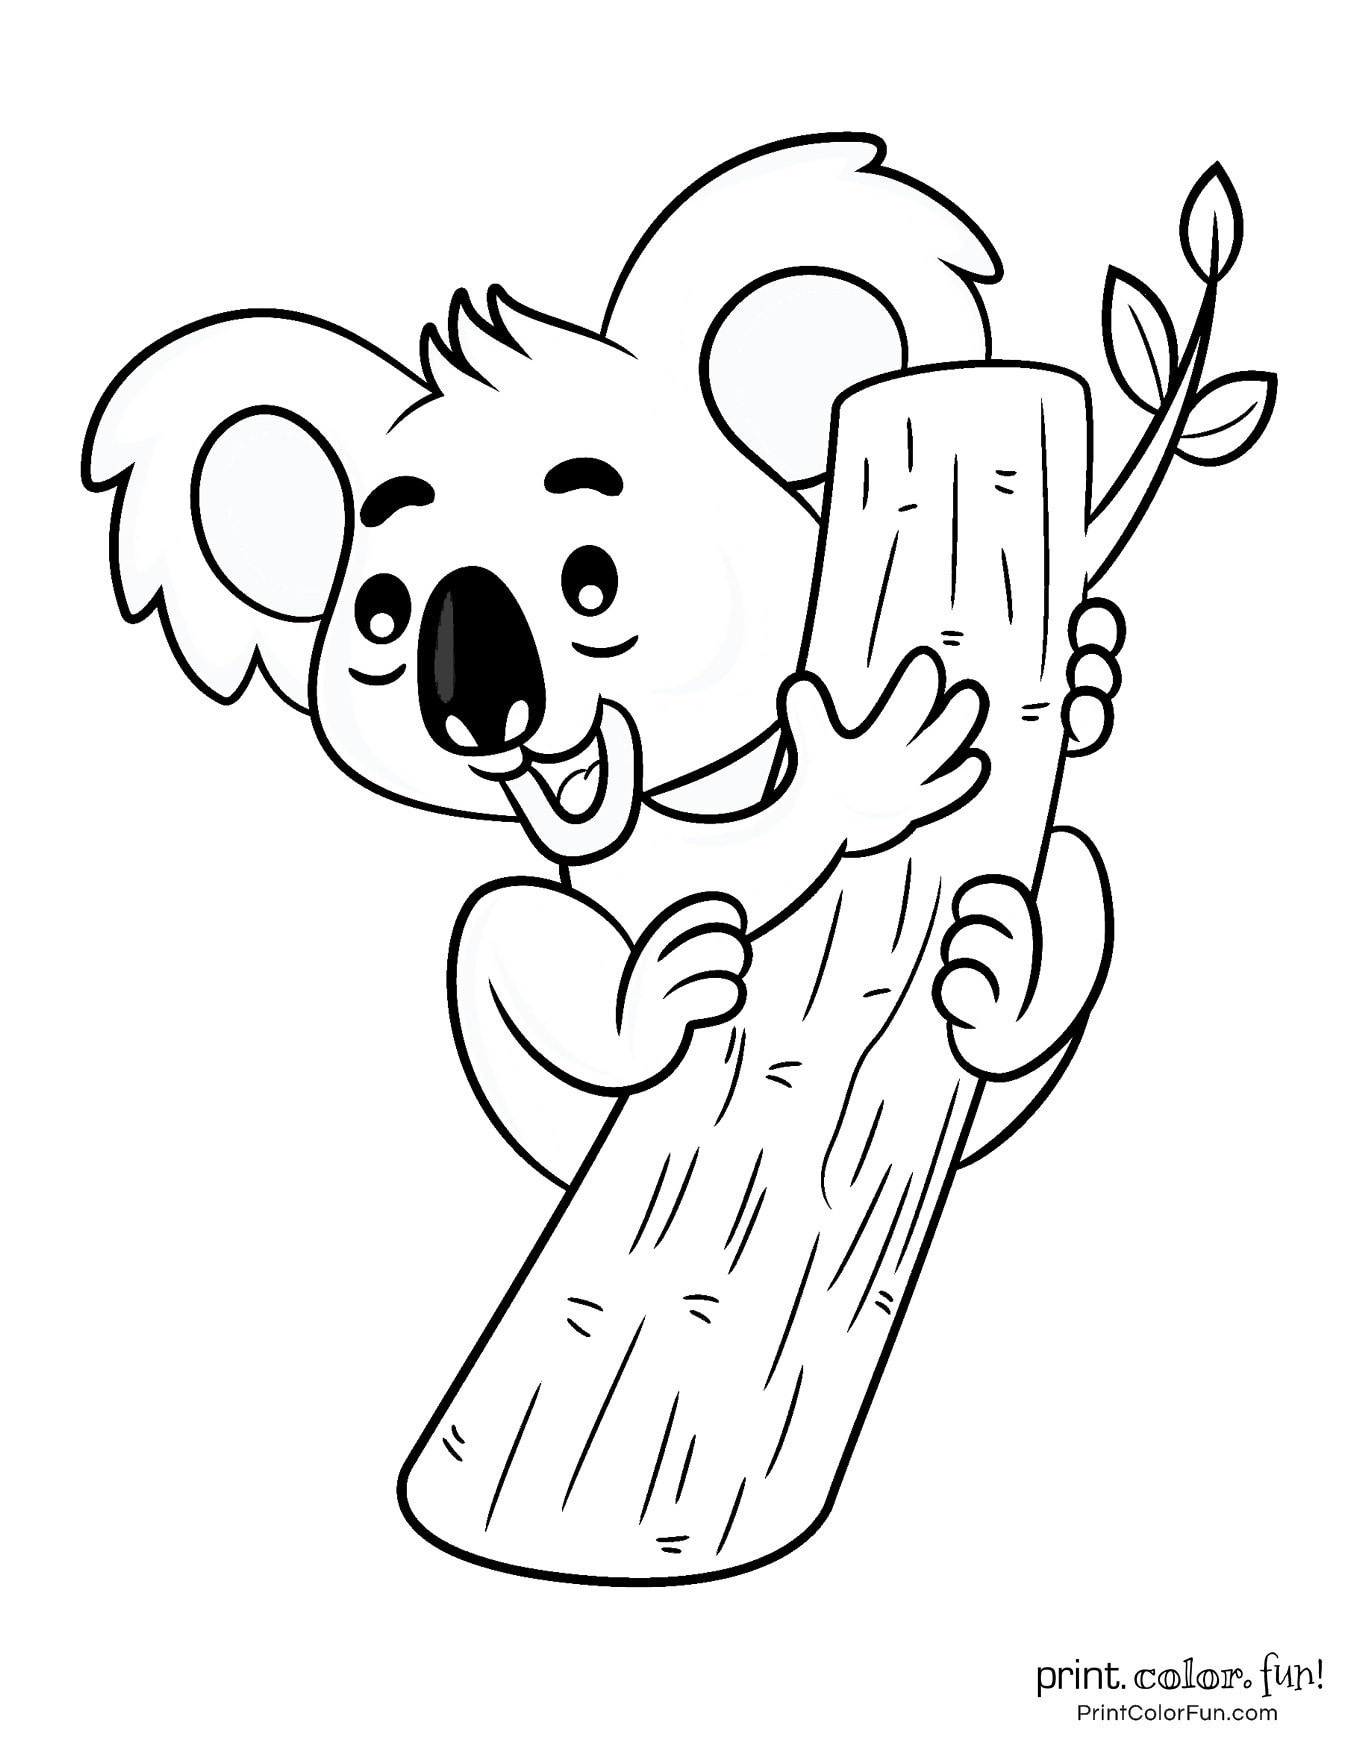 koala-coloring-pages-printable